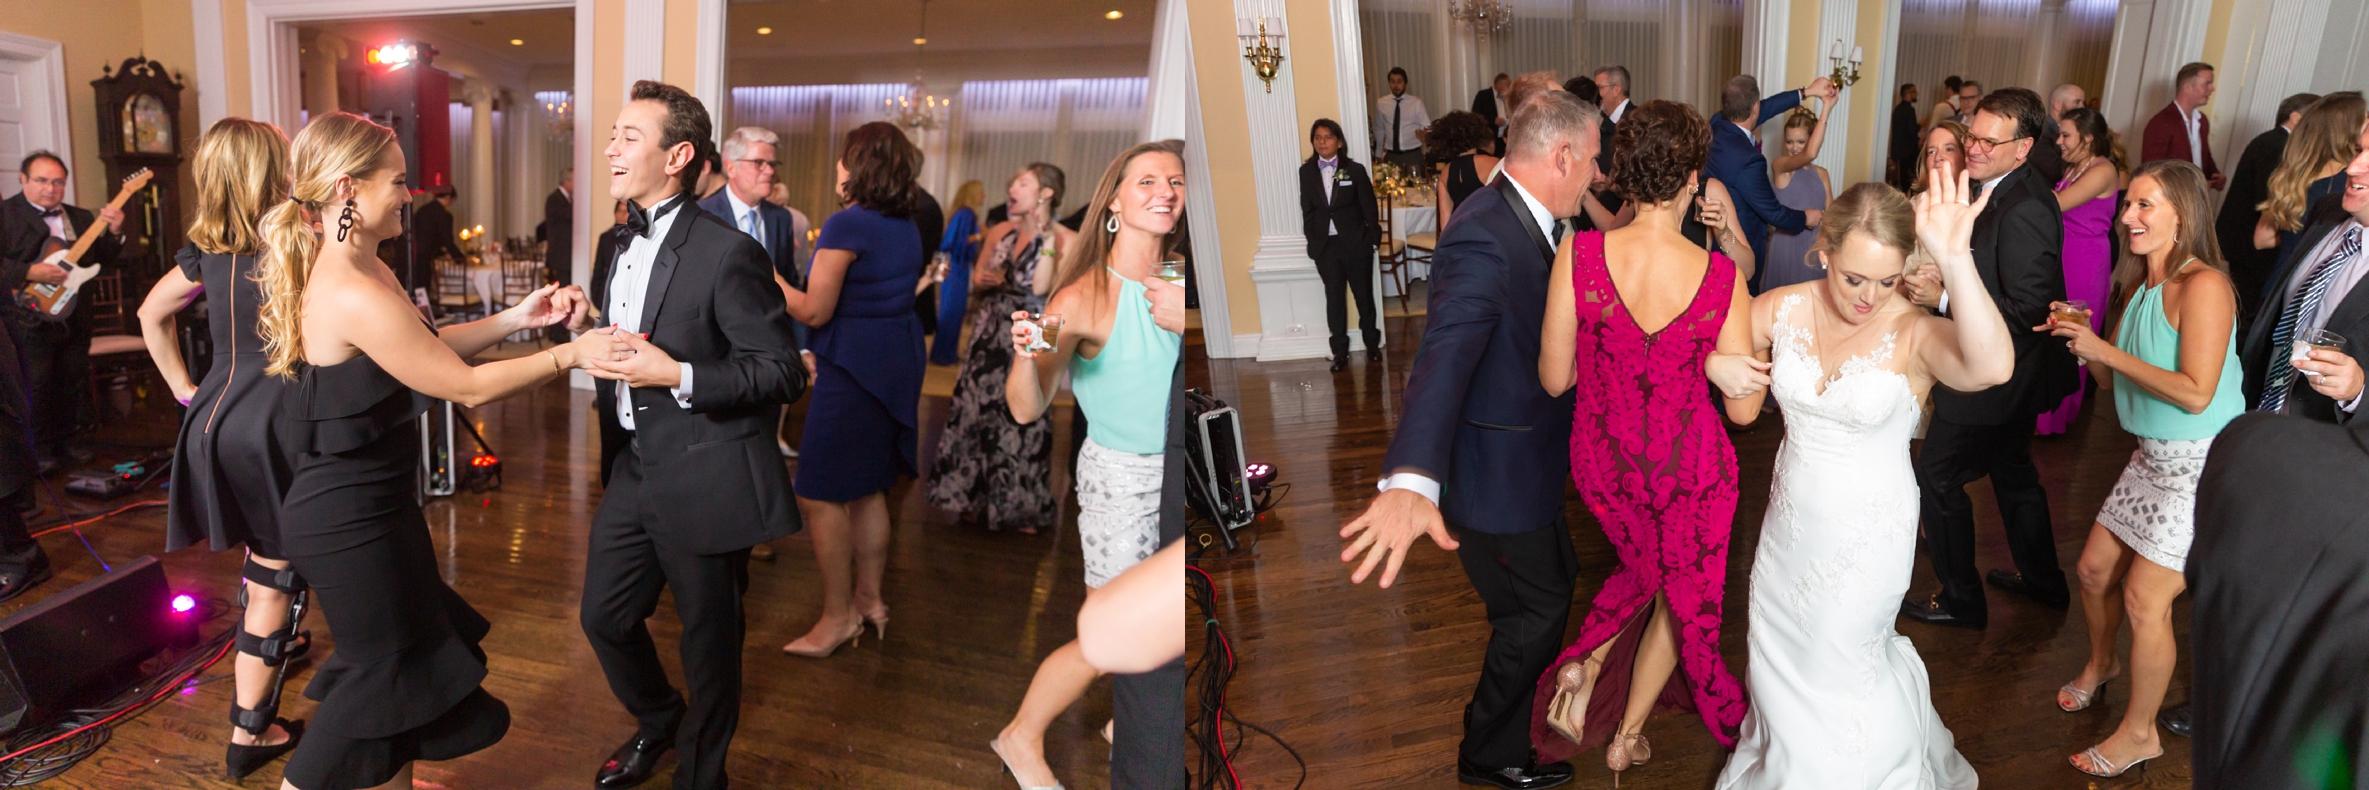 Reception Photography, Wedding in Cincinnati, Dancing Pictures